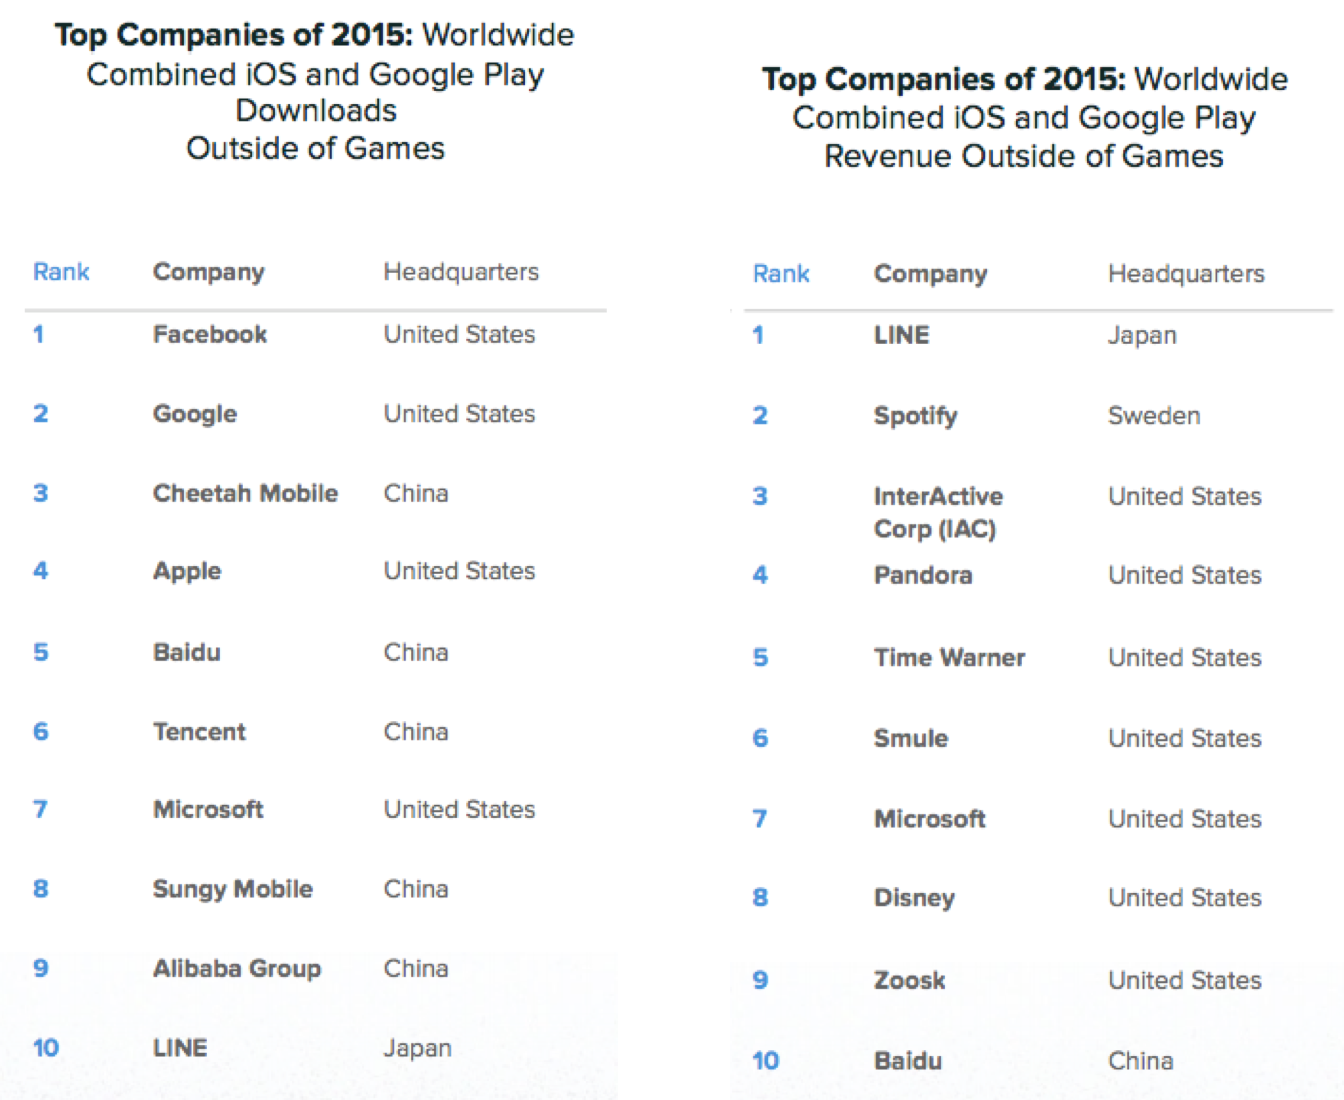 Top Companies of 2015